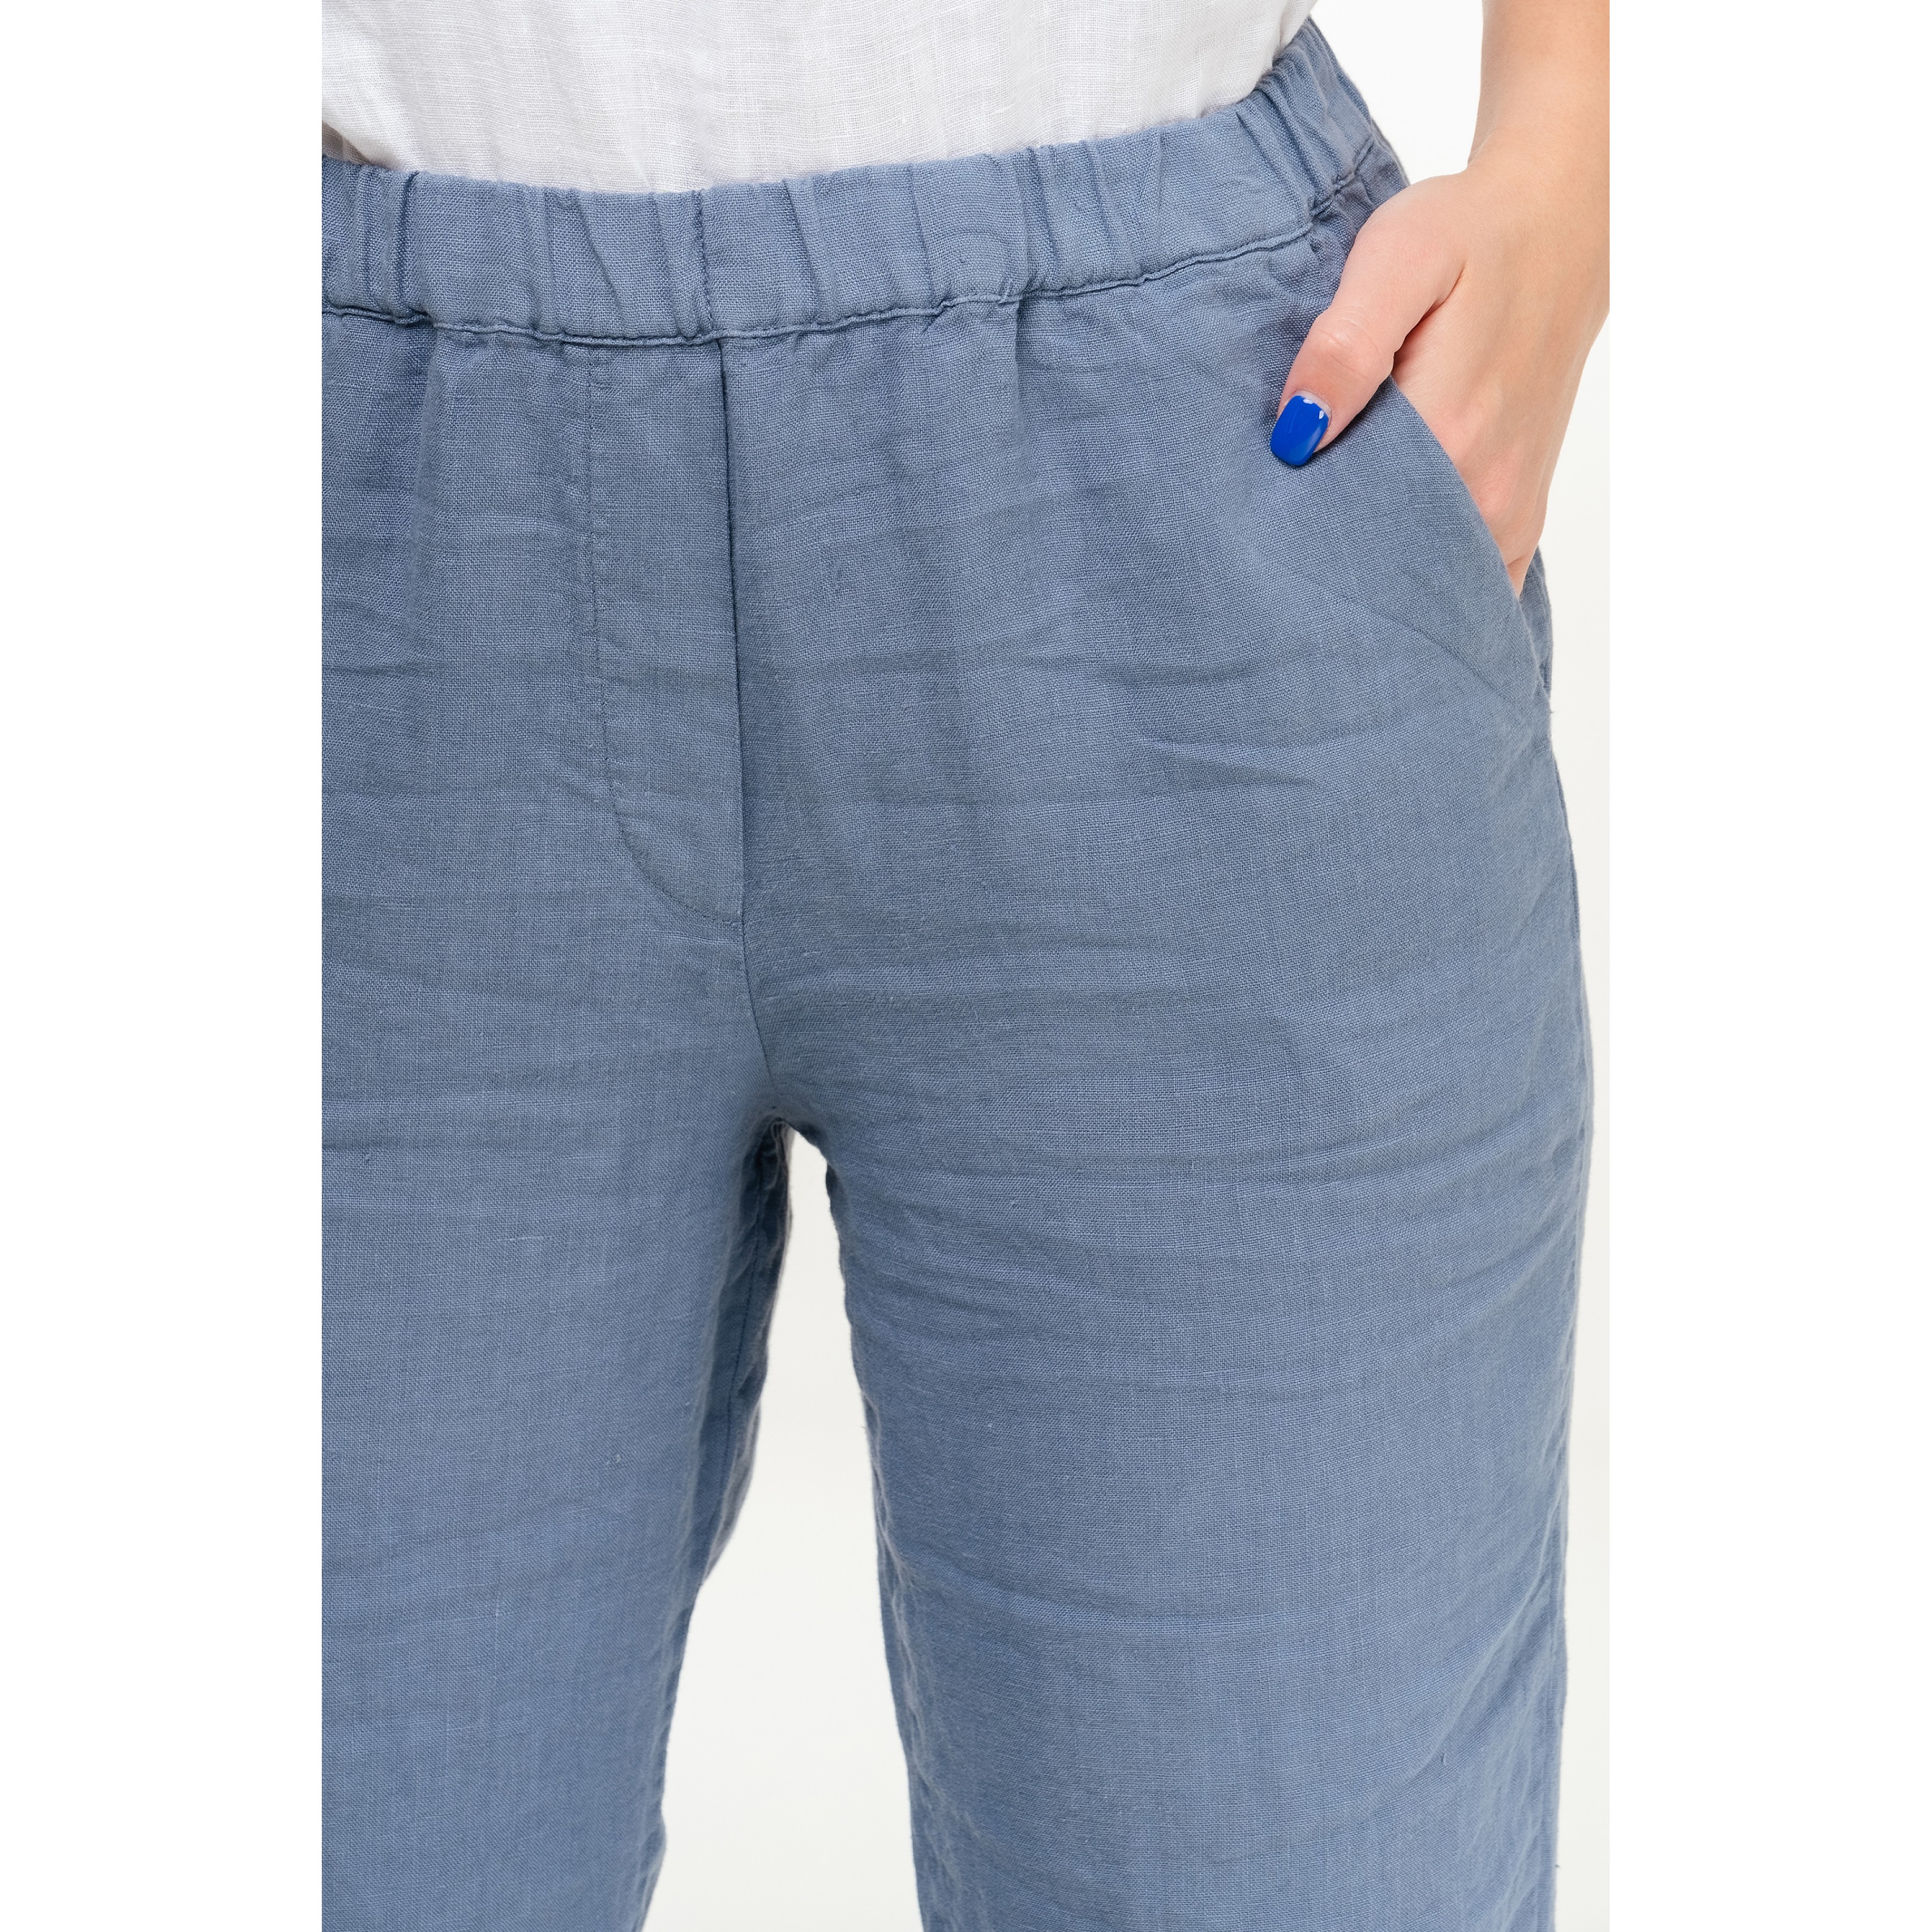 Women Elastic Waist Eco Linen Pants With Pockets